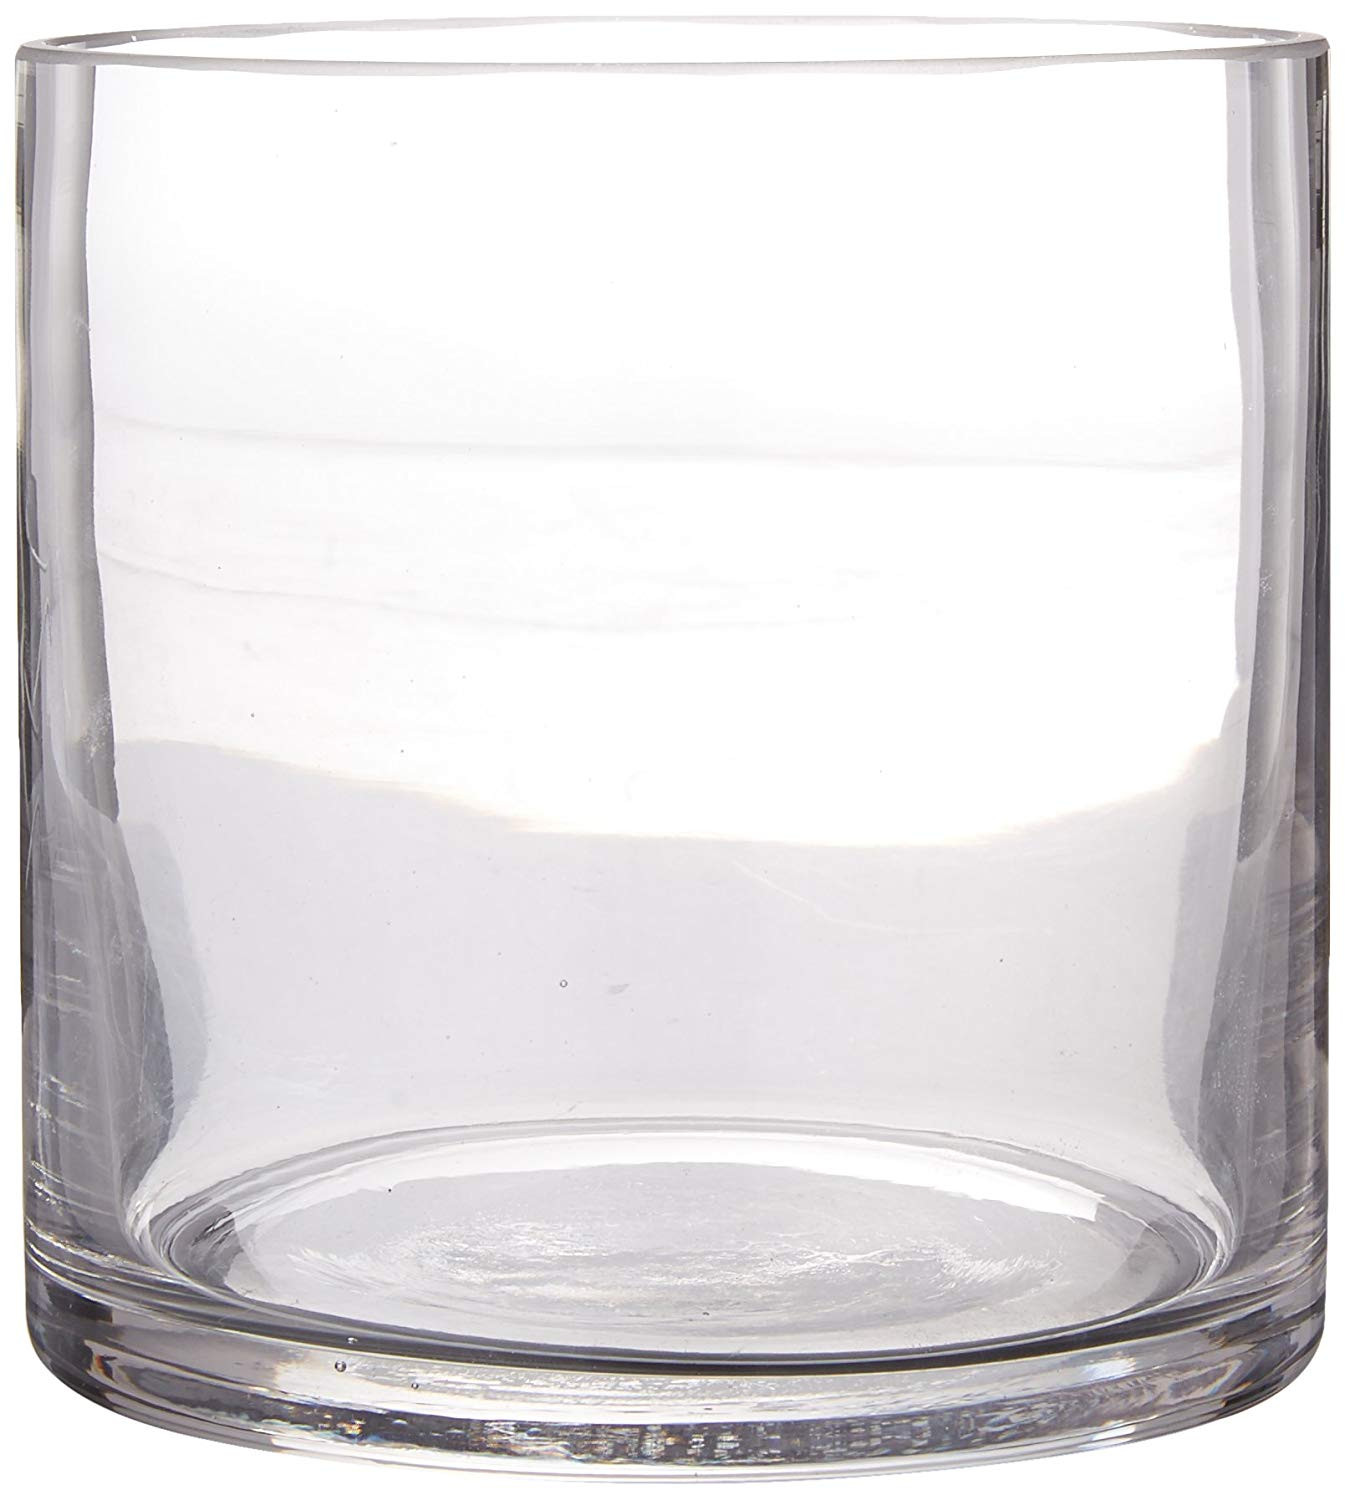 6 inch glass cylinder vase of amazon com couronne company 7250 large cylinder glass vase 67 6 oz with regard to amazon com couronne company 7250 large cylinder glass vase 67 6 oz capacity home kitchen